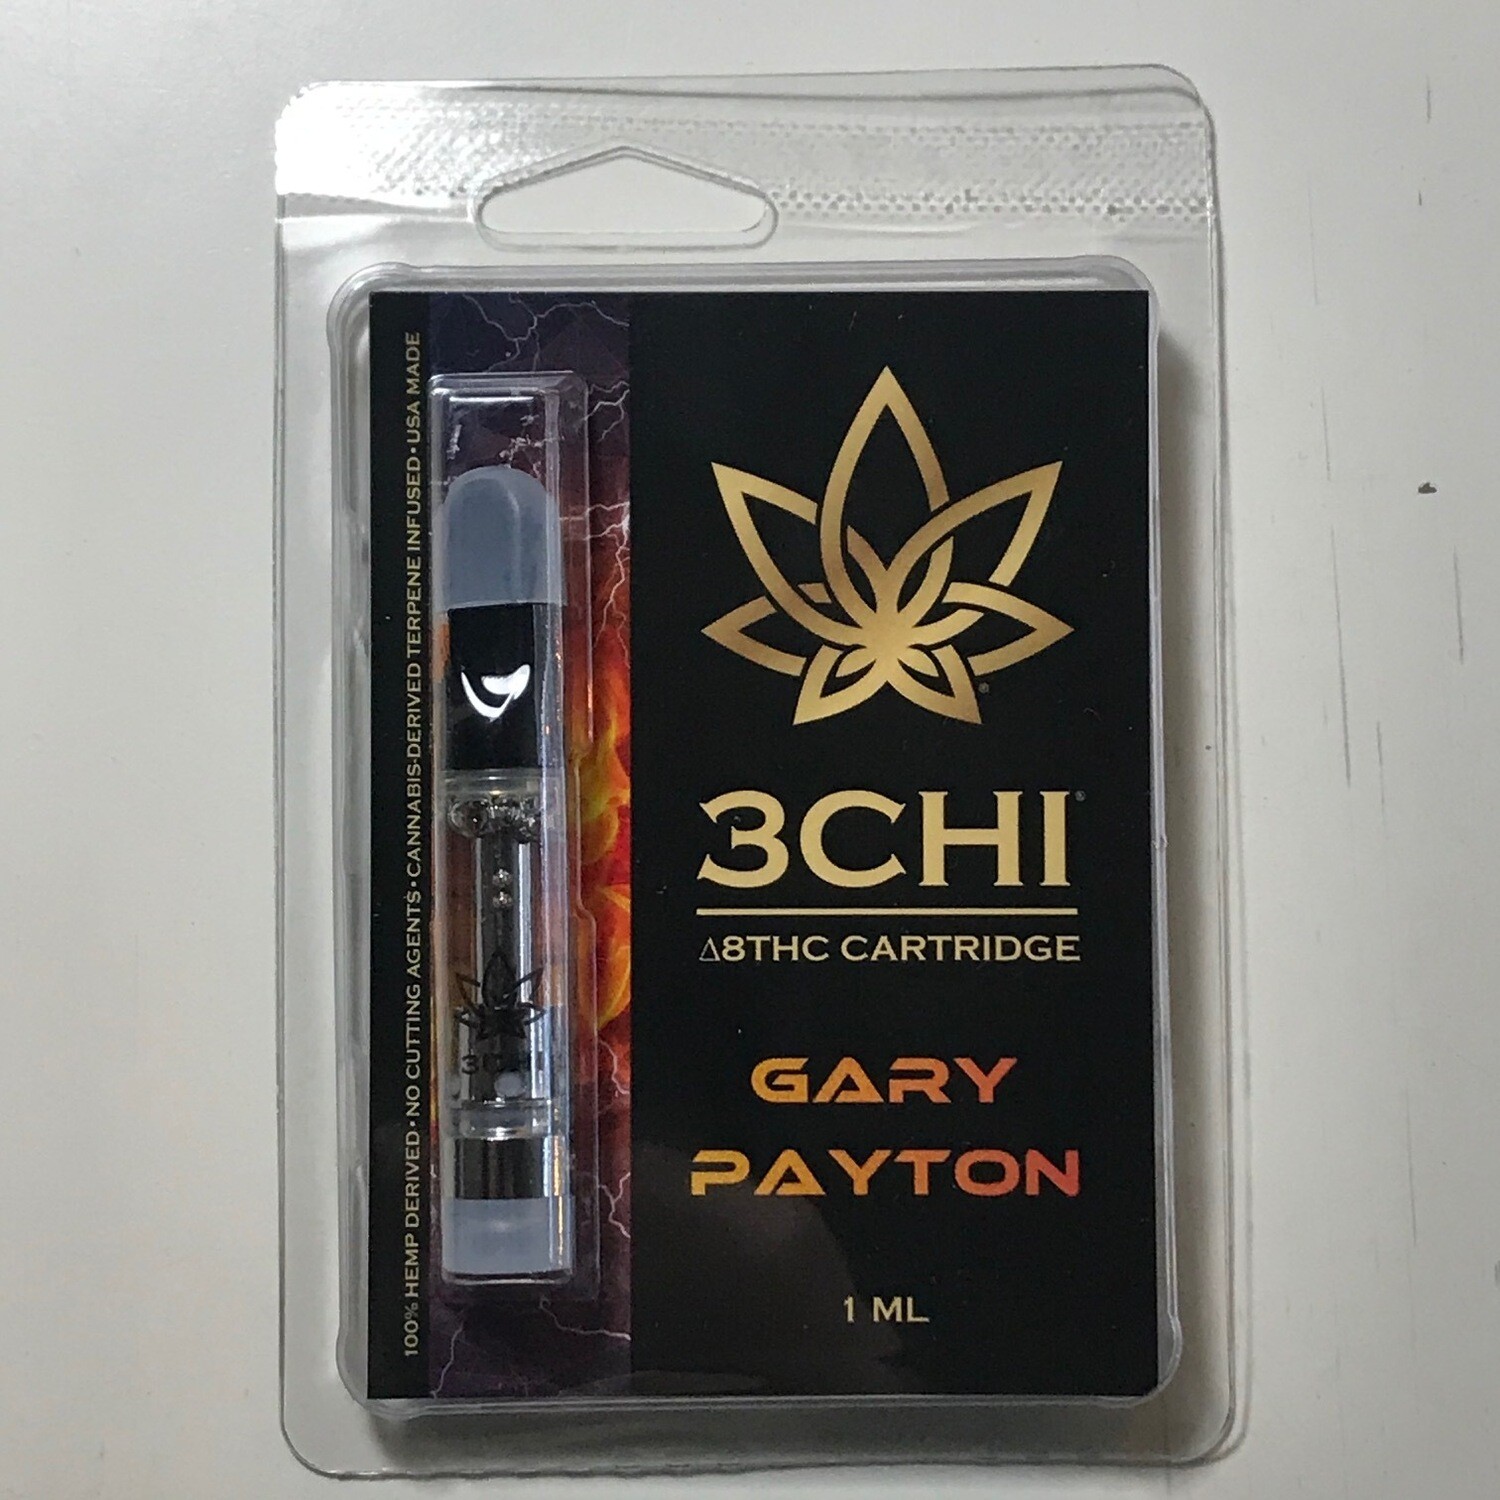 3CHI 950mg Delta8 Gary Payton 1mL Cartridge